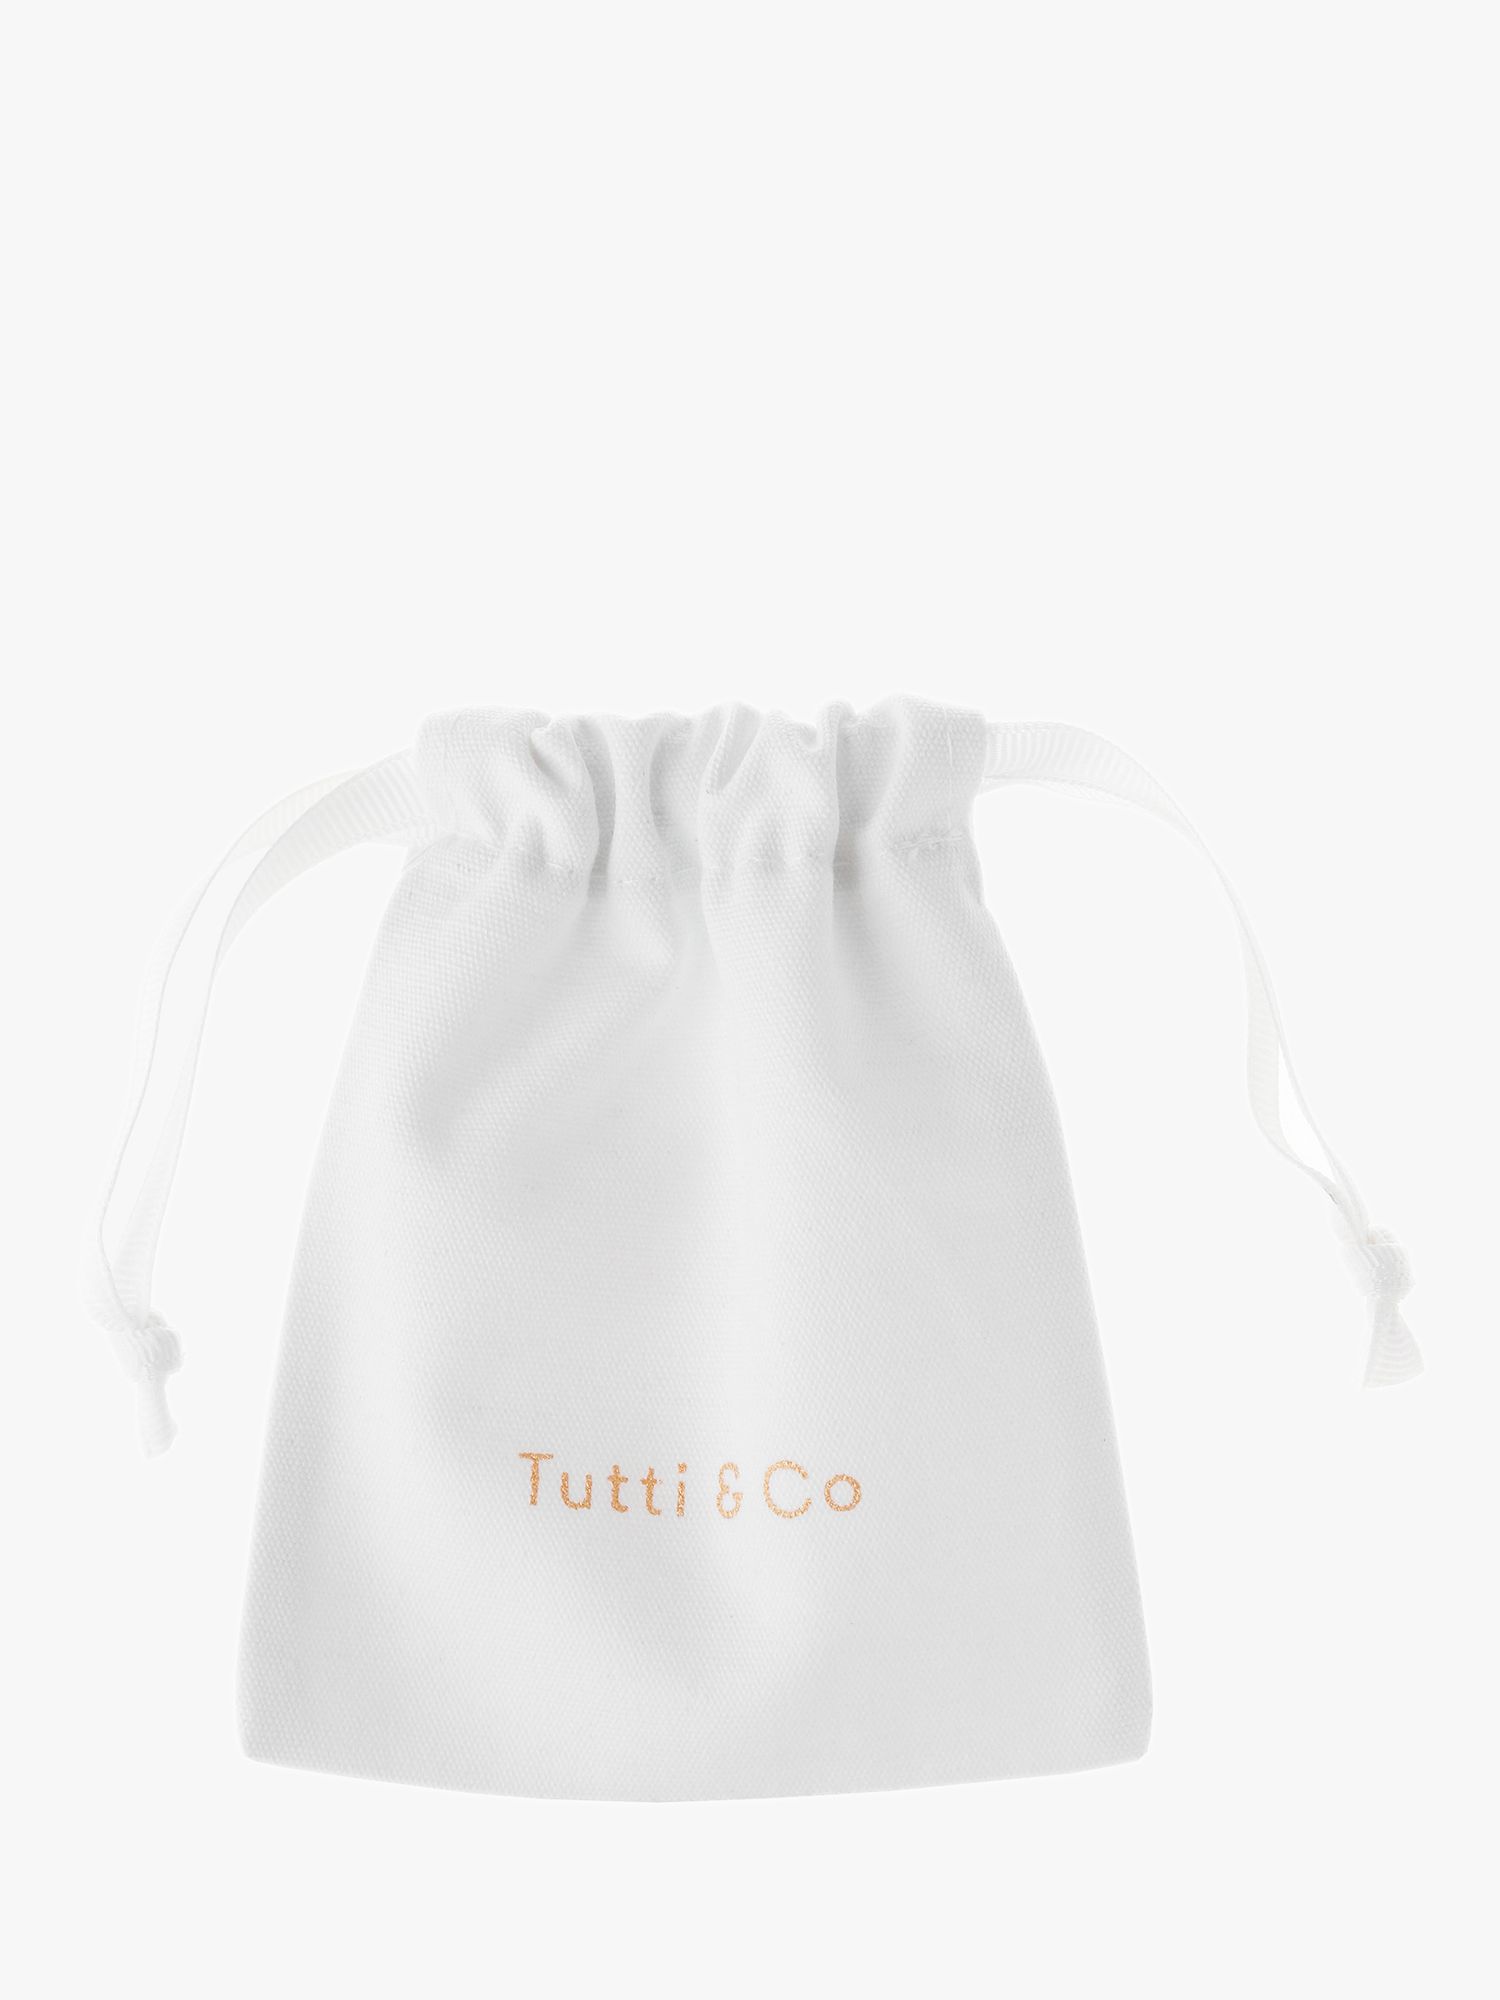 Buy Tutti & Co Freedom Slider Friendship Bracelet Online at johnlewis.com